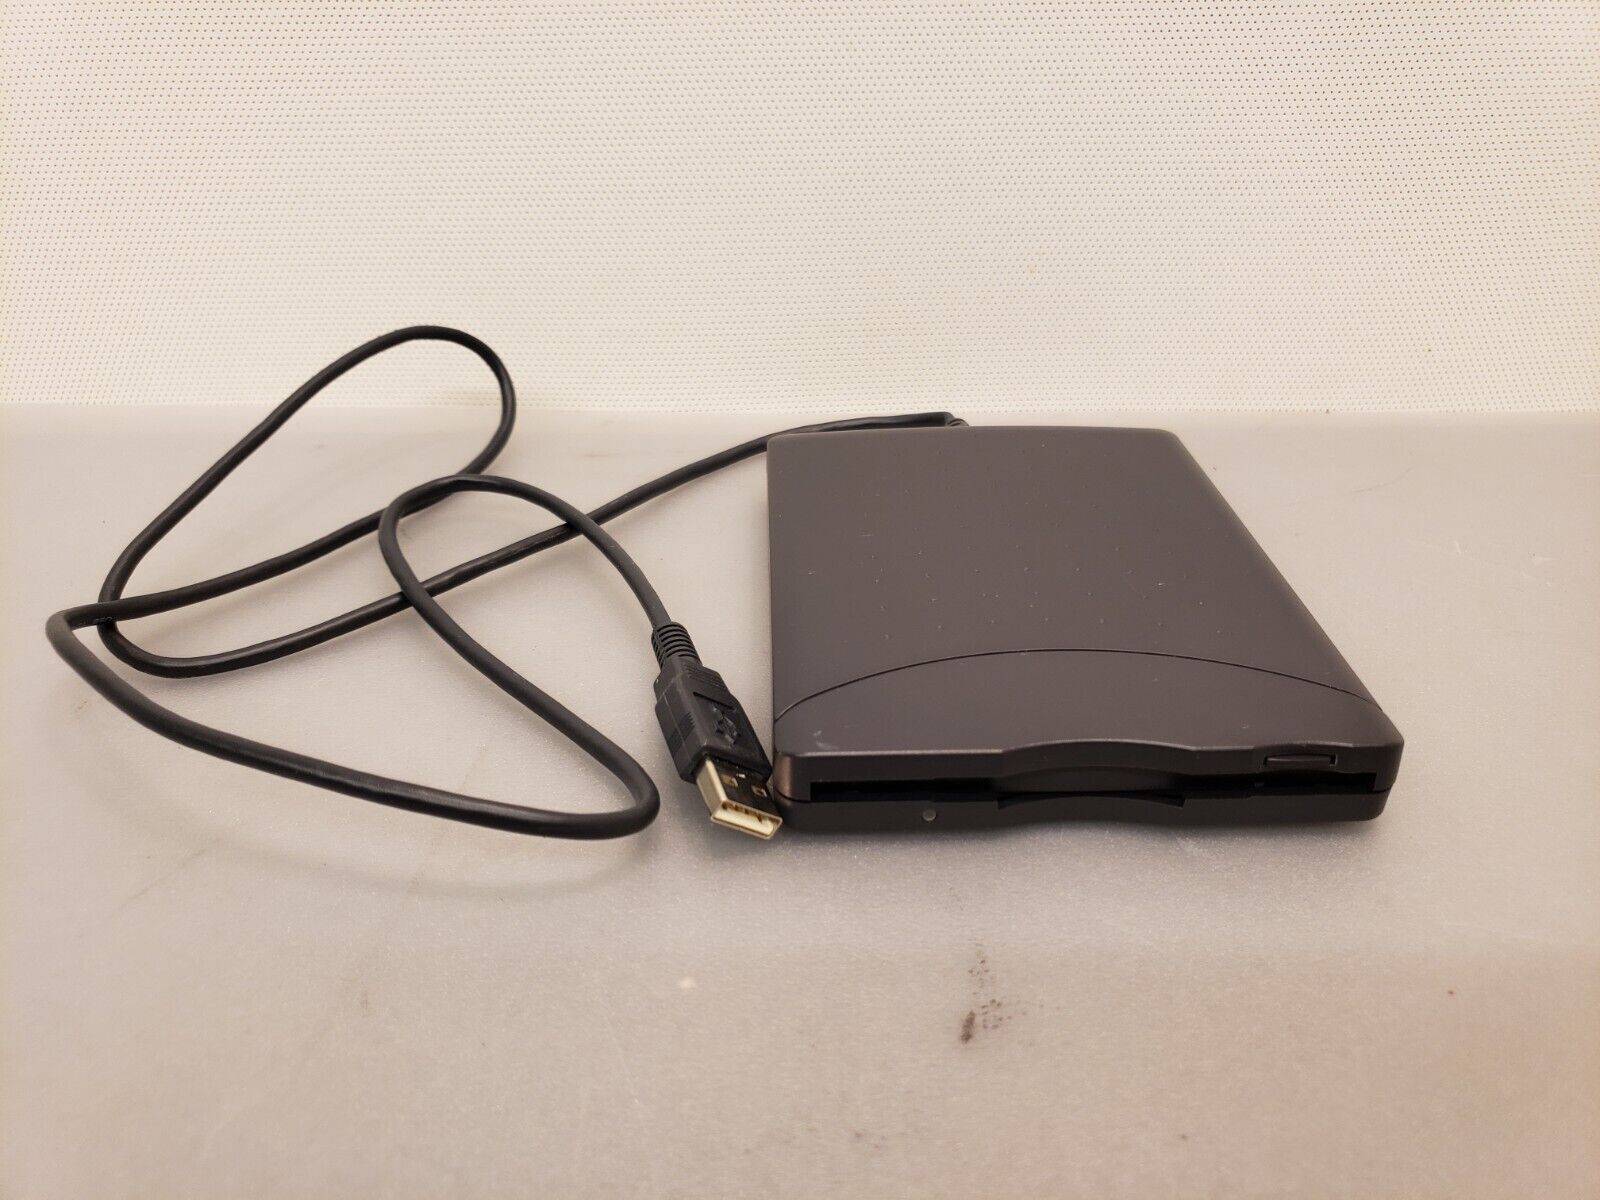 Vintage NEC Dell External USB Floppy Disk Drive FDD UF0002 M4763, R&W Tested